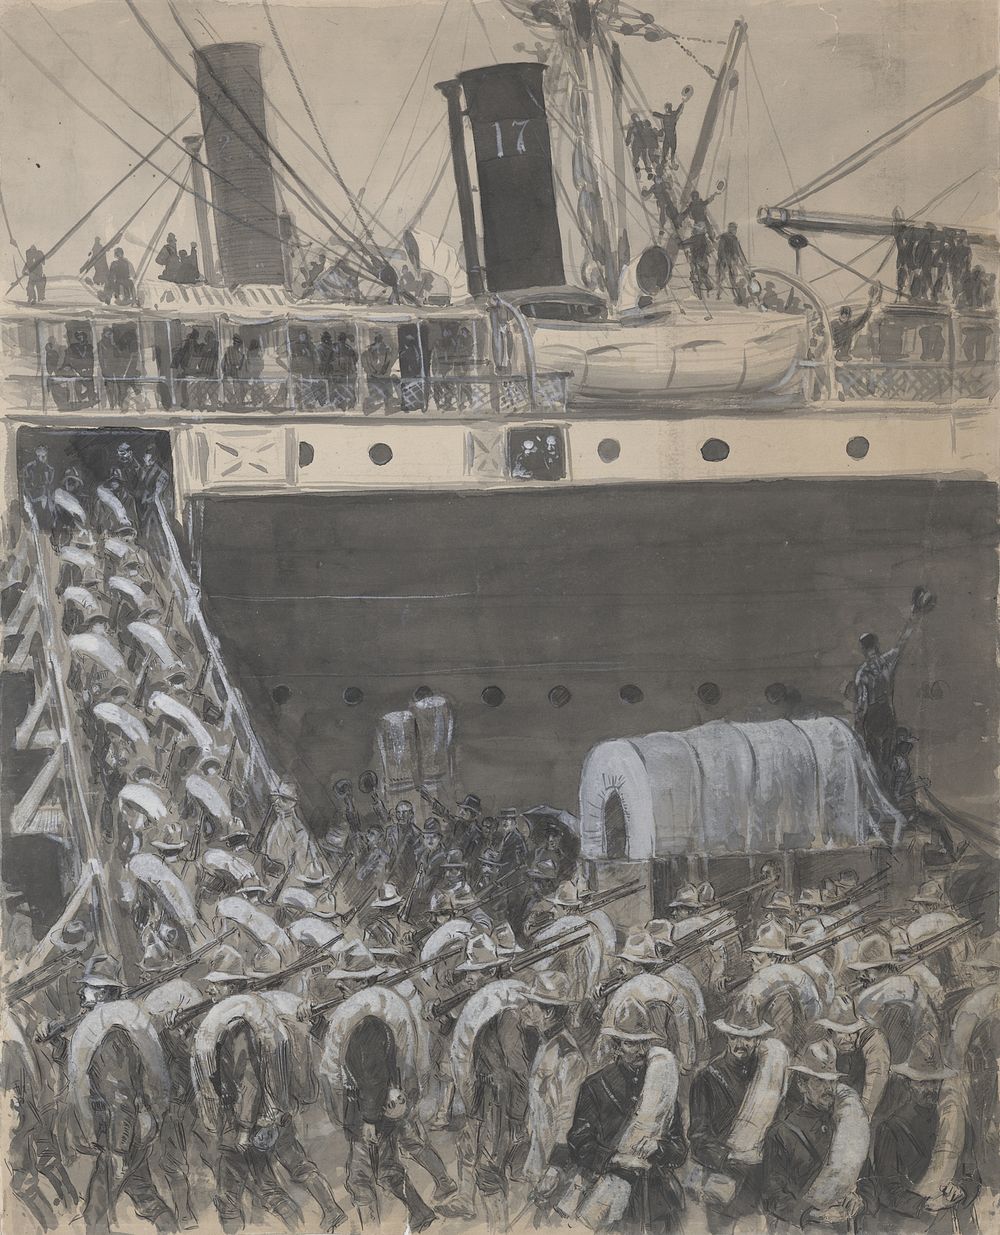 American troops boarding transport steamer, Spanish-American war (1898) by William J Glackens